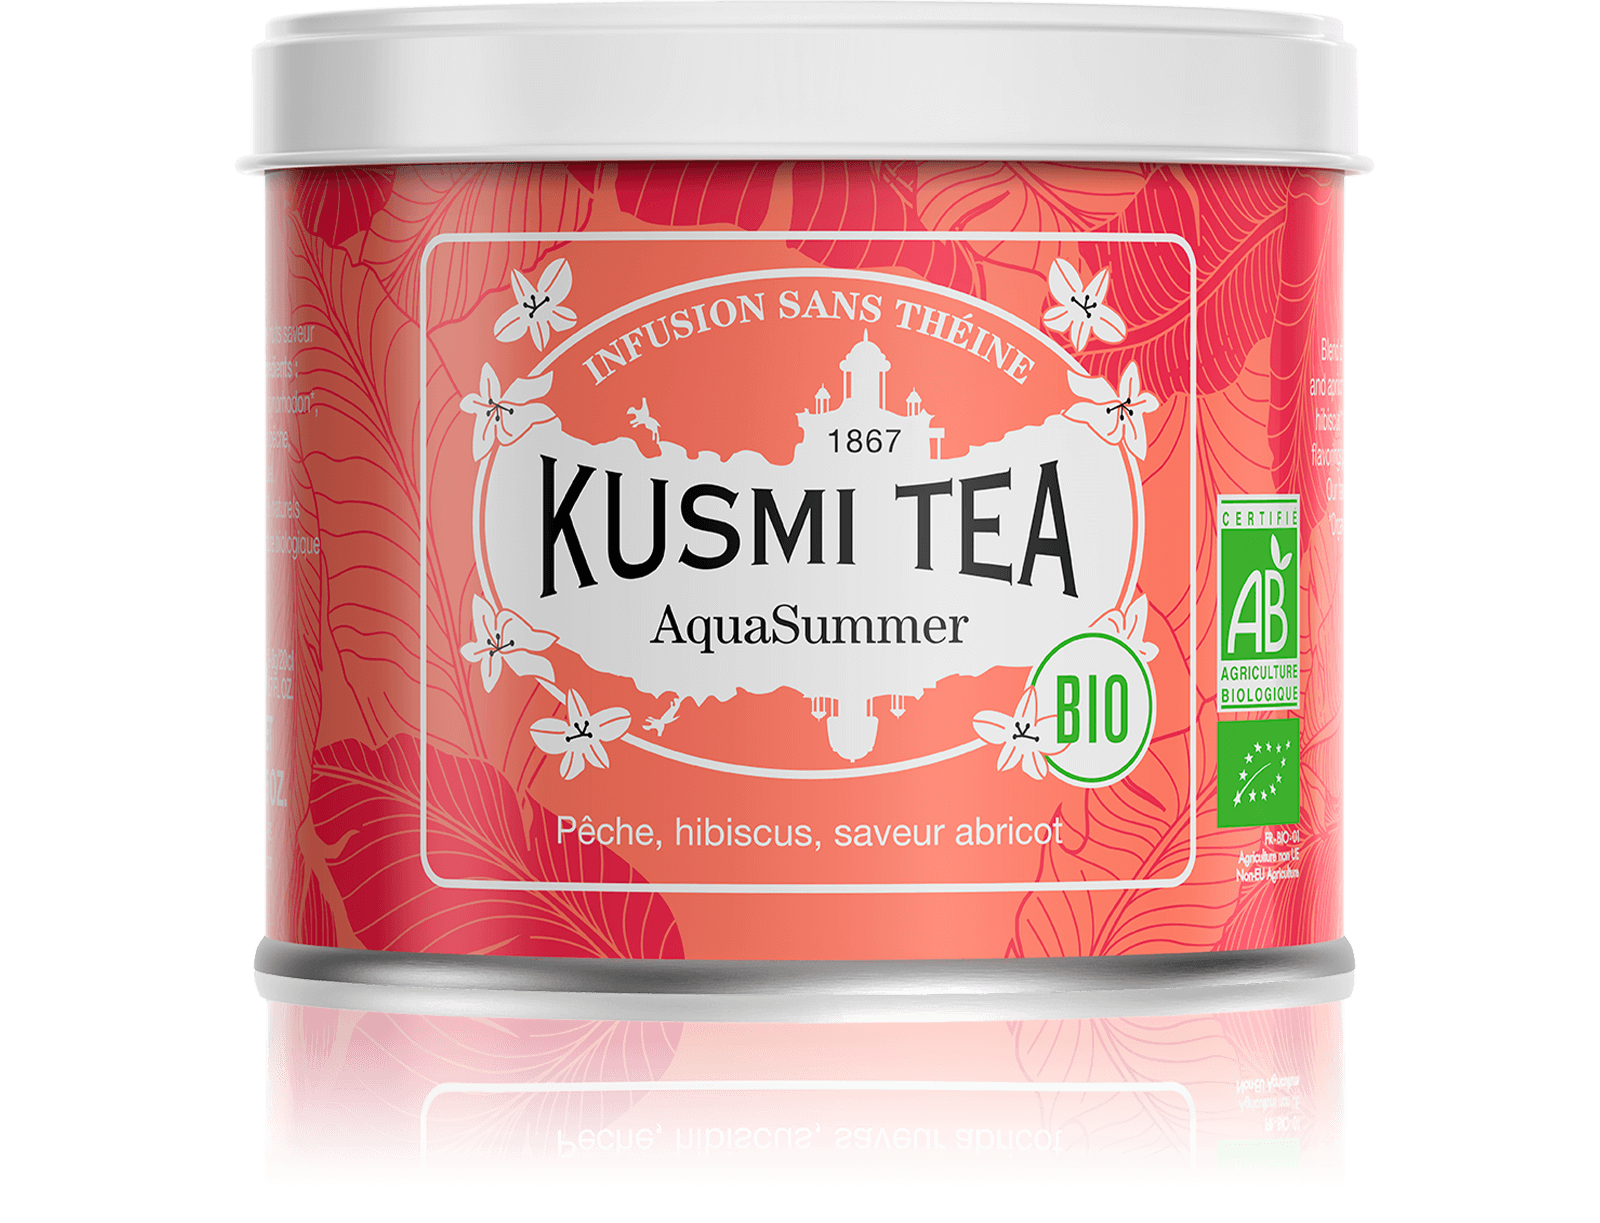 AquaSummer (Organic herbal tea) - Kusmi Tea